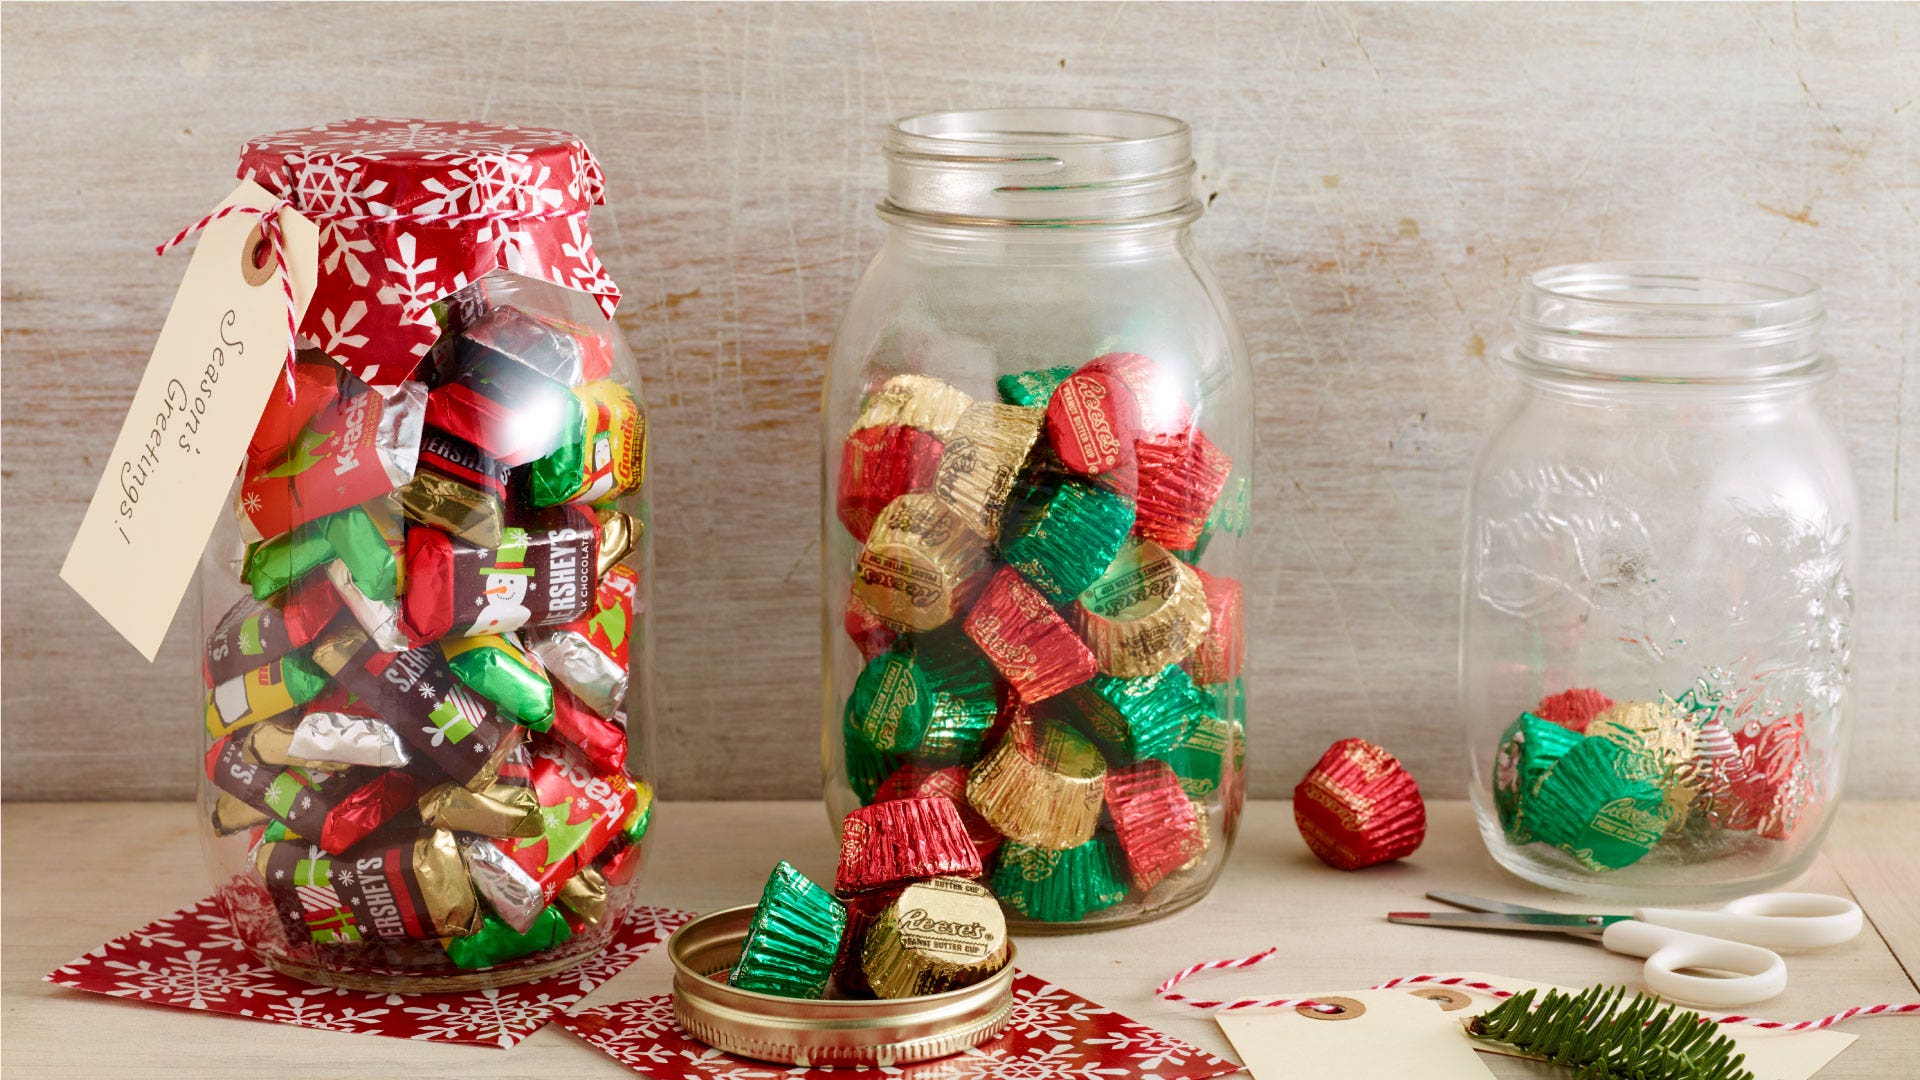 https://www.hersheyland.com/content/dam/hersheyland/en-us/crafts/craft-images/holiday-candy-jars.jpg